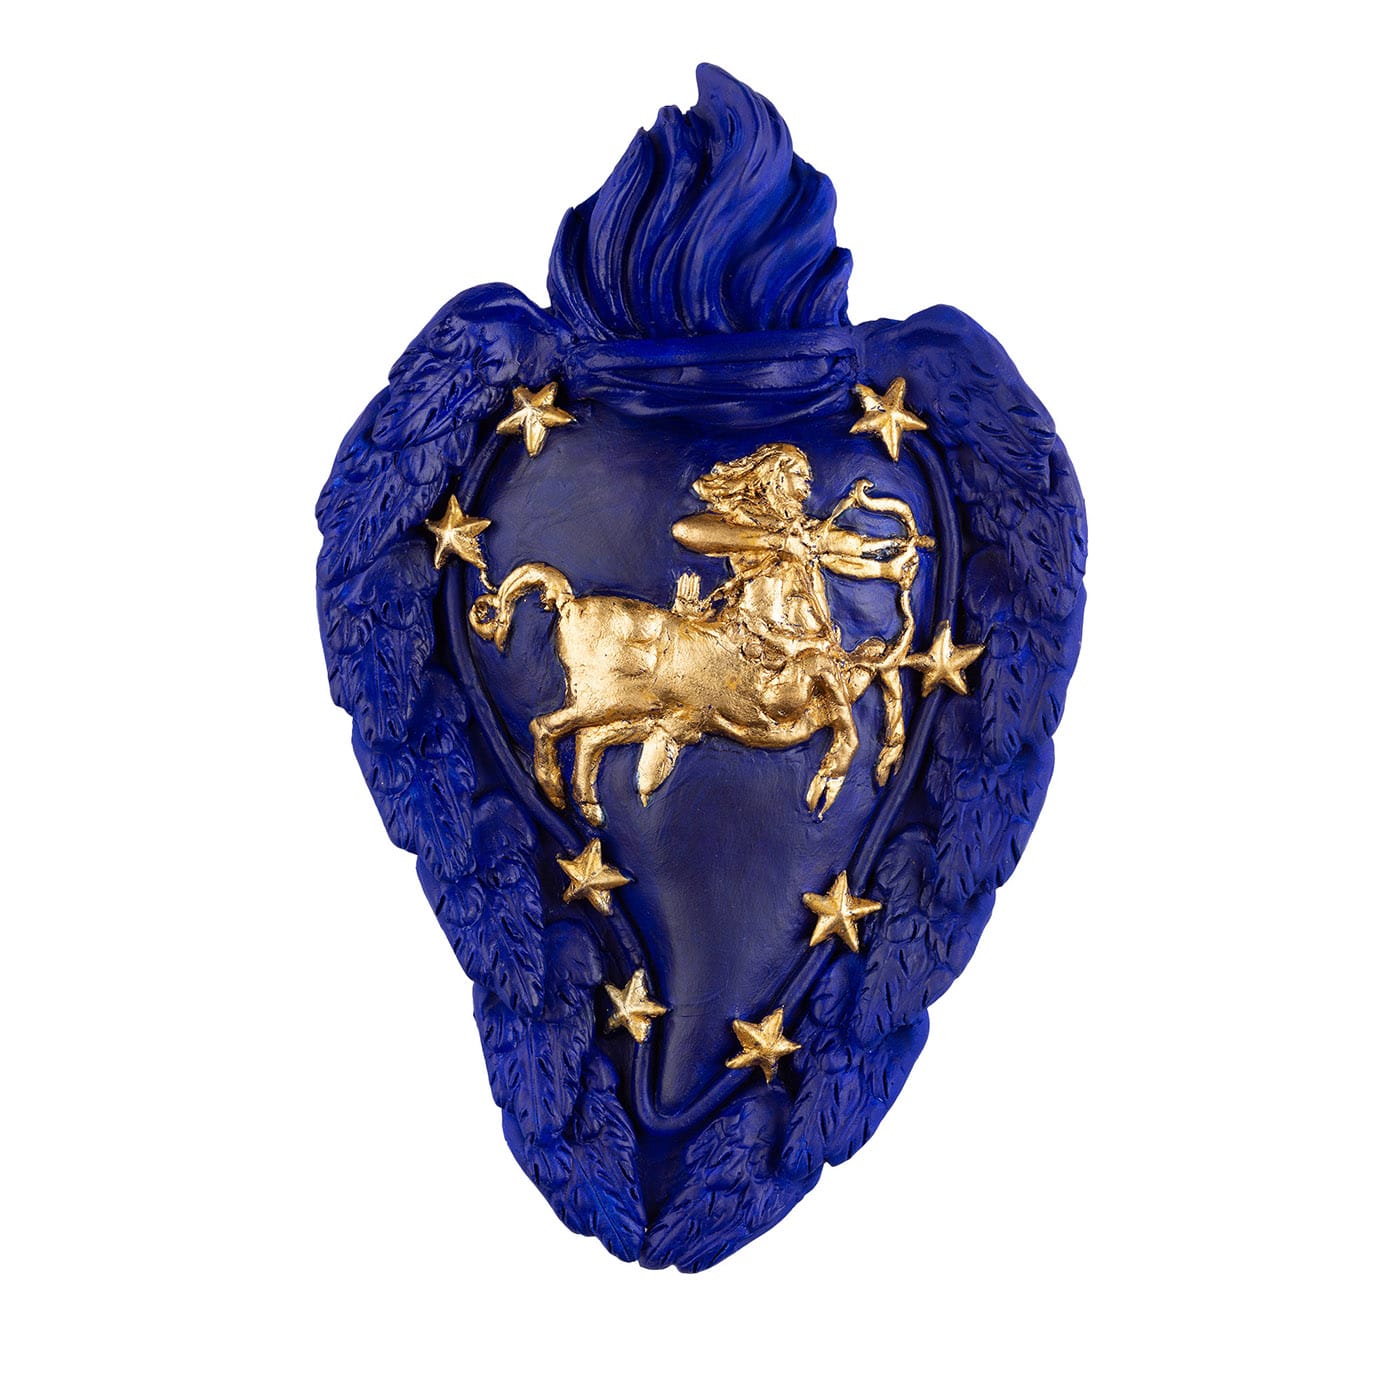 Zodiaco Sagittarius Ceramic Heart - Cuore di Argilla